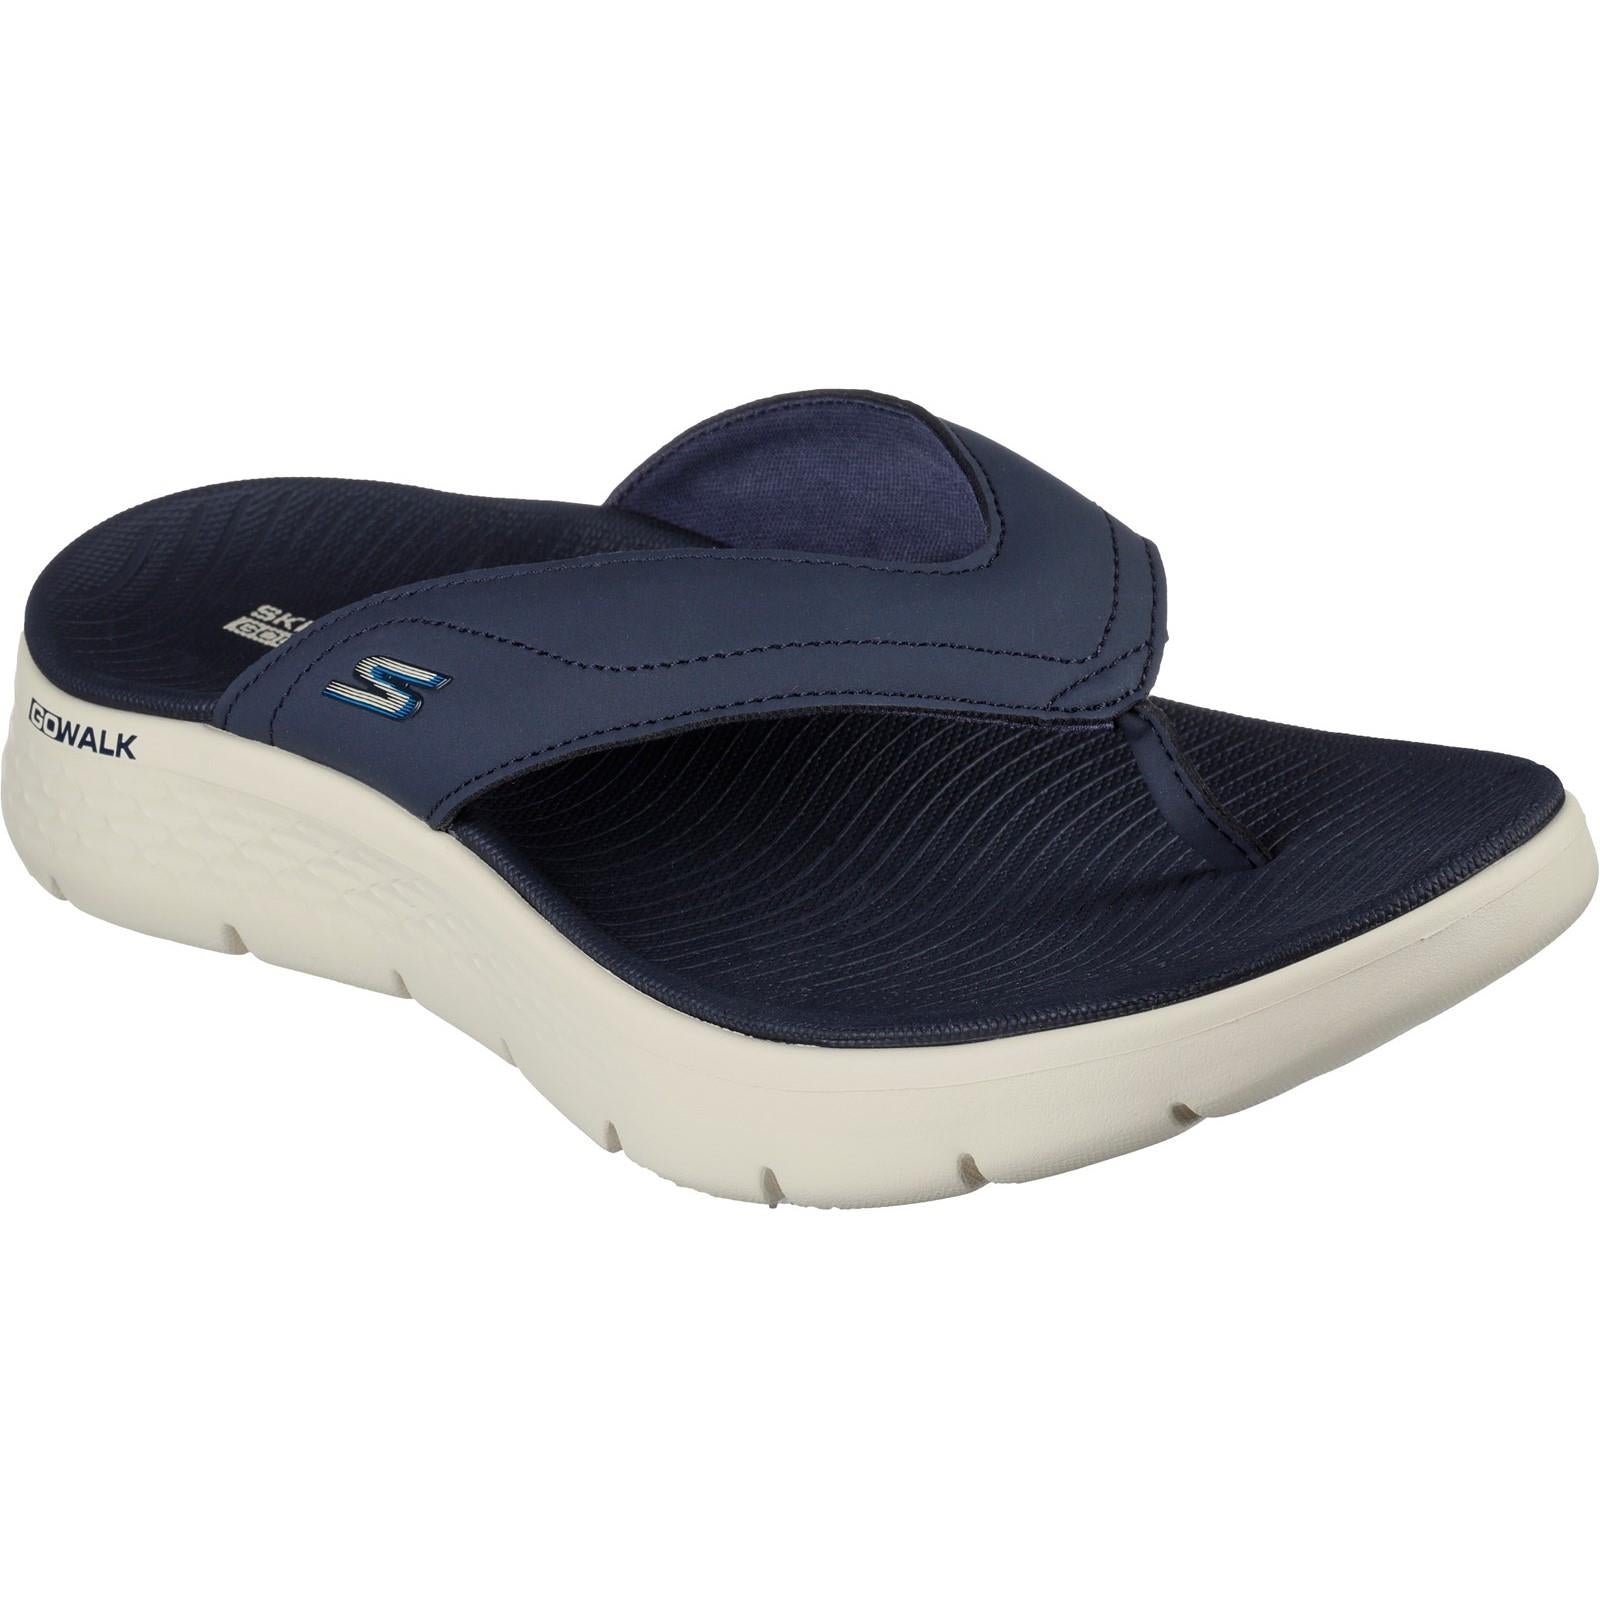 Skechers Go Walk Flex Vallejo navy blue summer flip flop sandals #229202